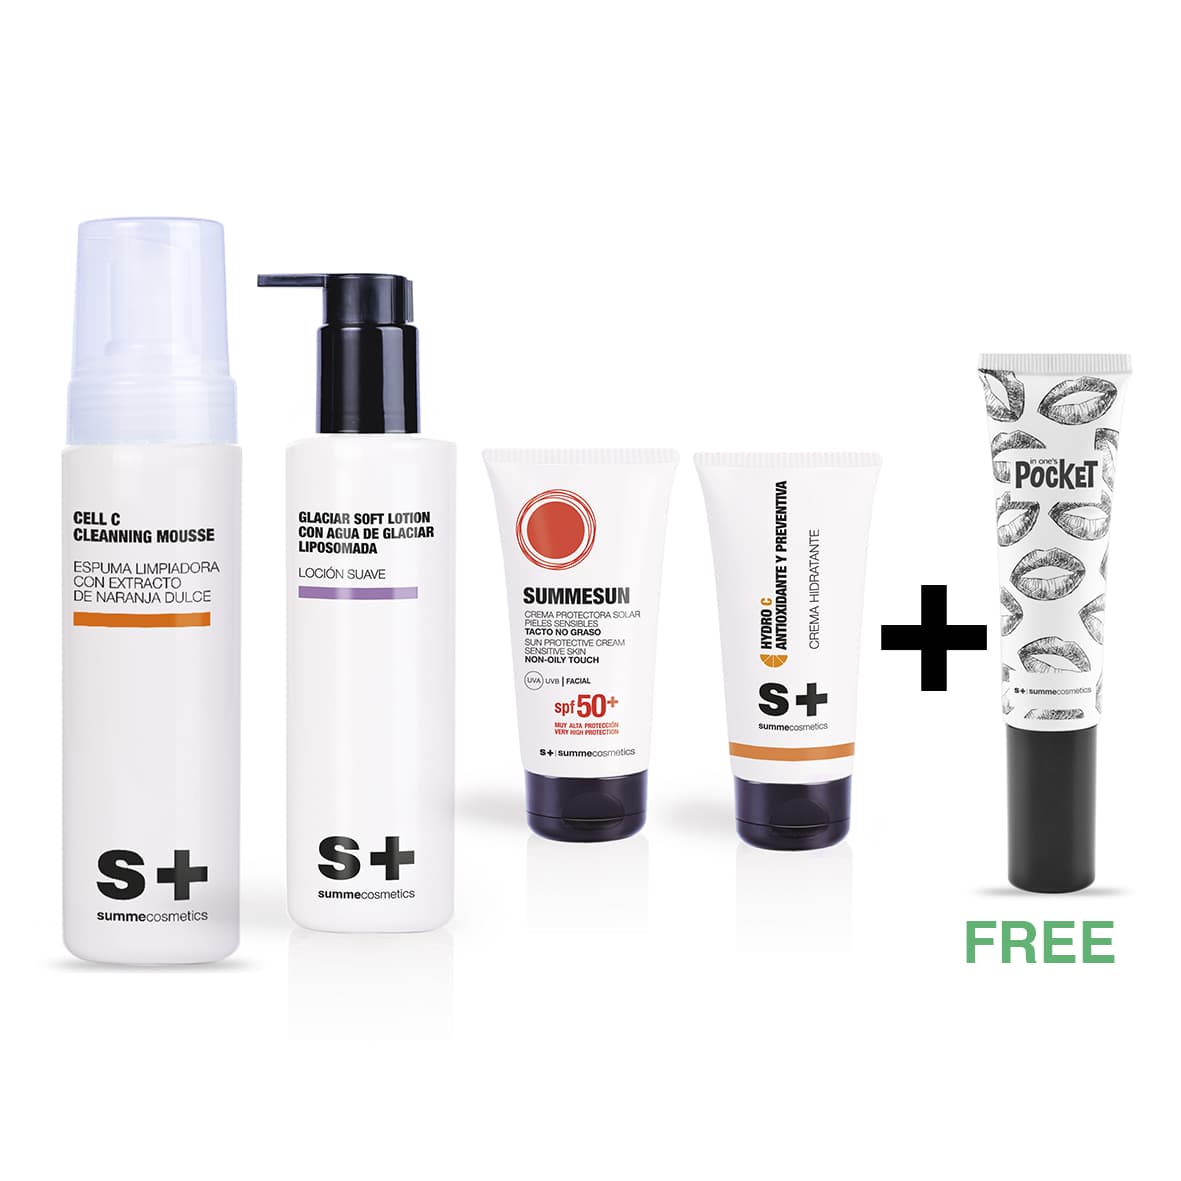 S+ Vitamin C Skin Routine Pack - SKN-CARE Beauty Skin Care